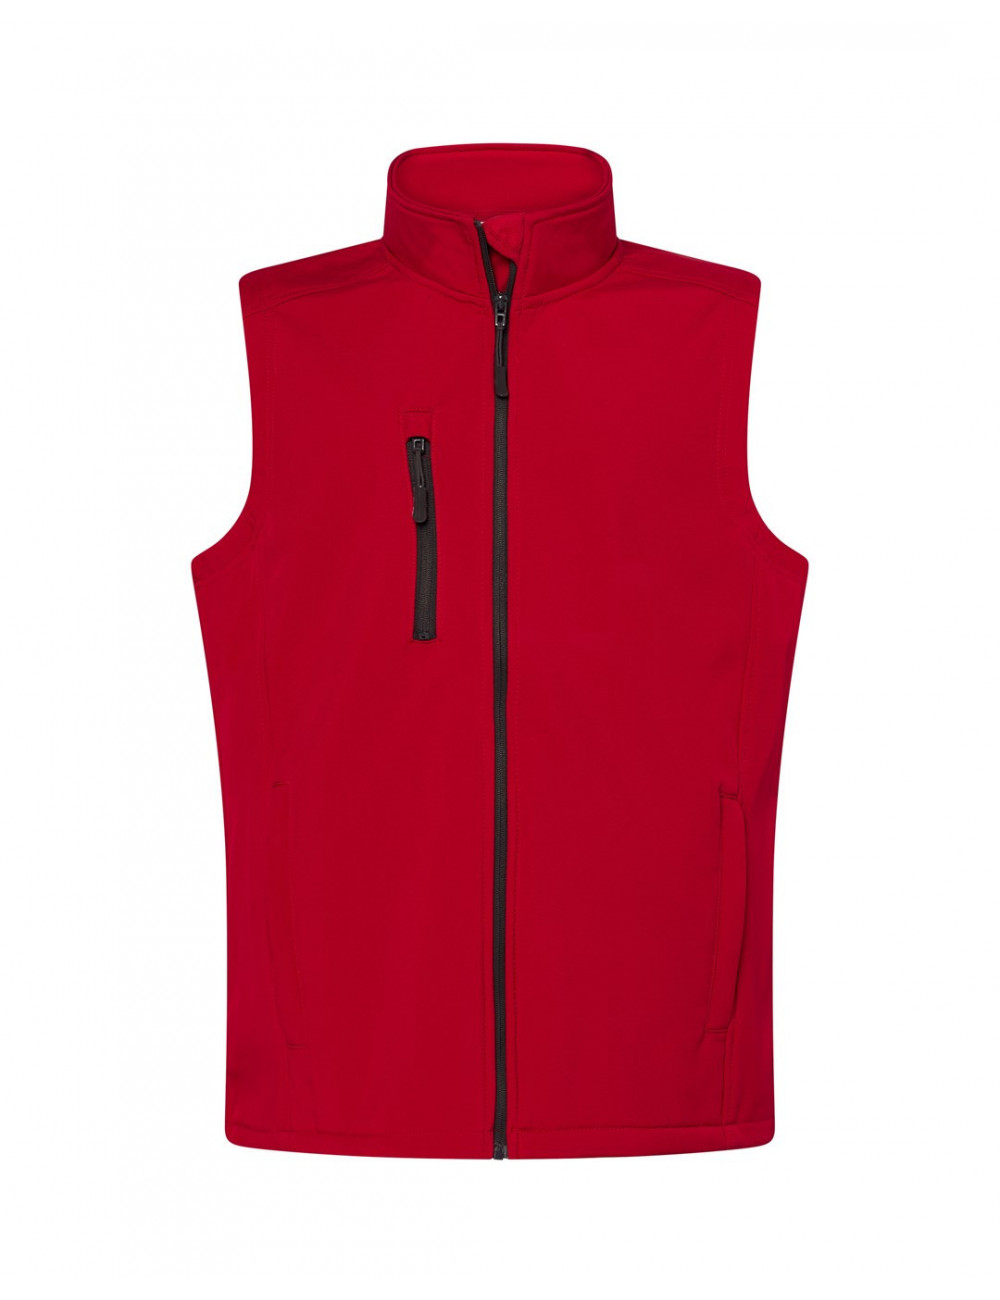 Softhshell vest jacket red Jhk